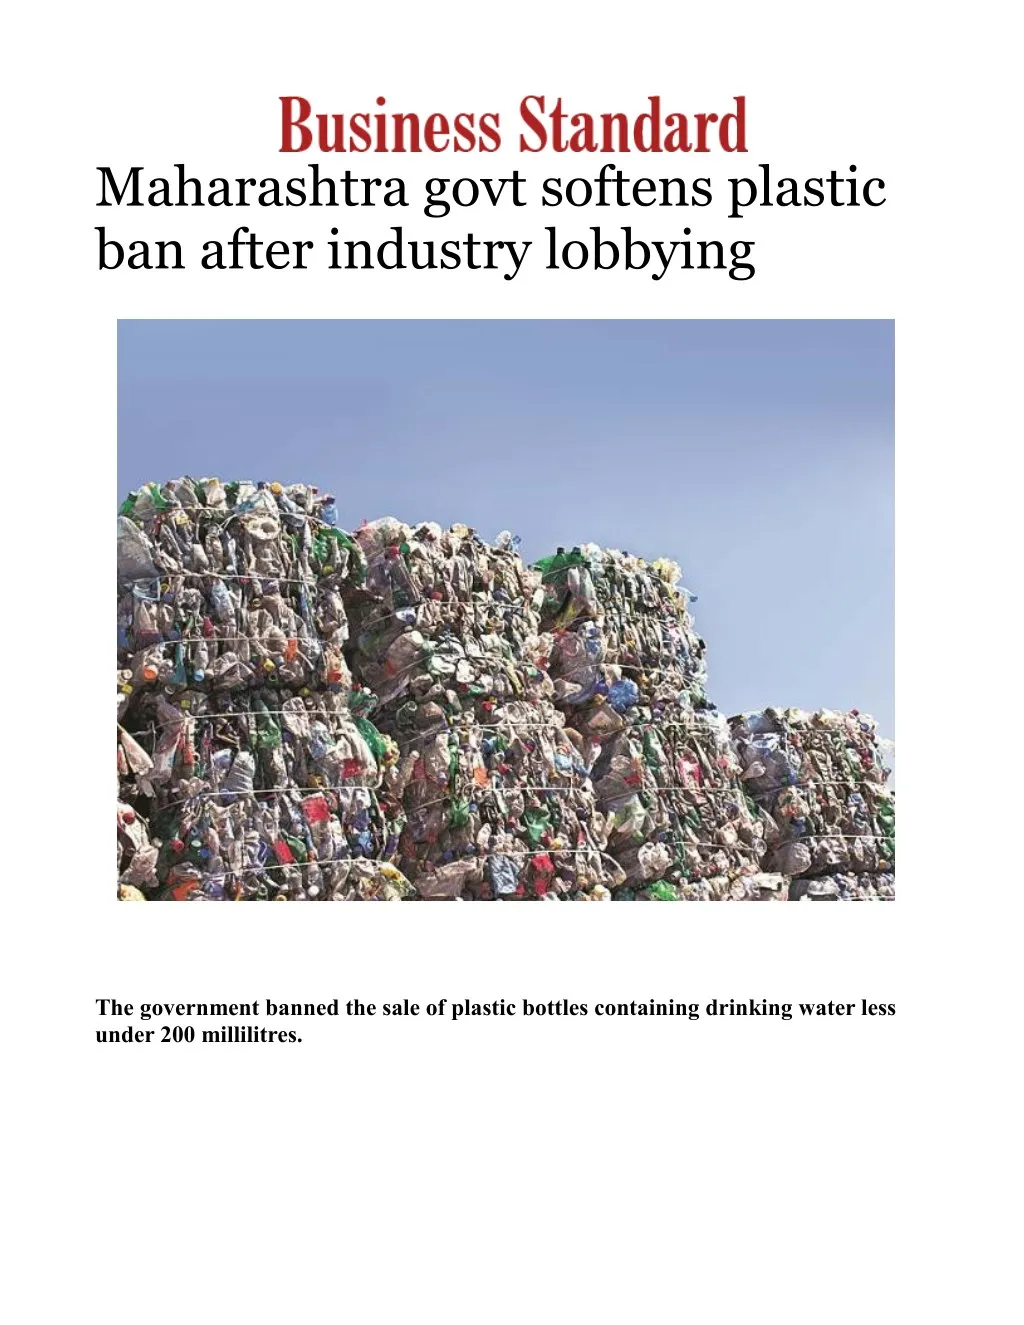 maharashtra govt softens plastic ban after